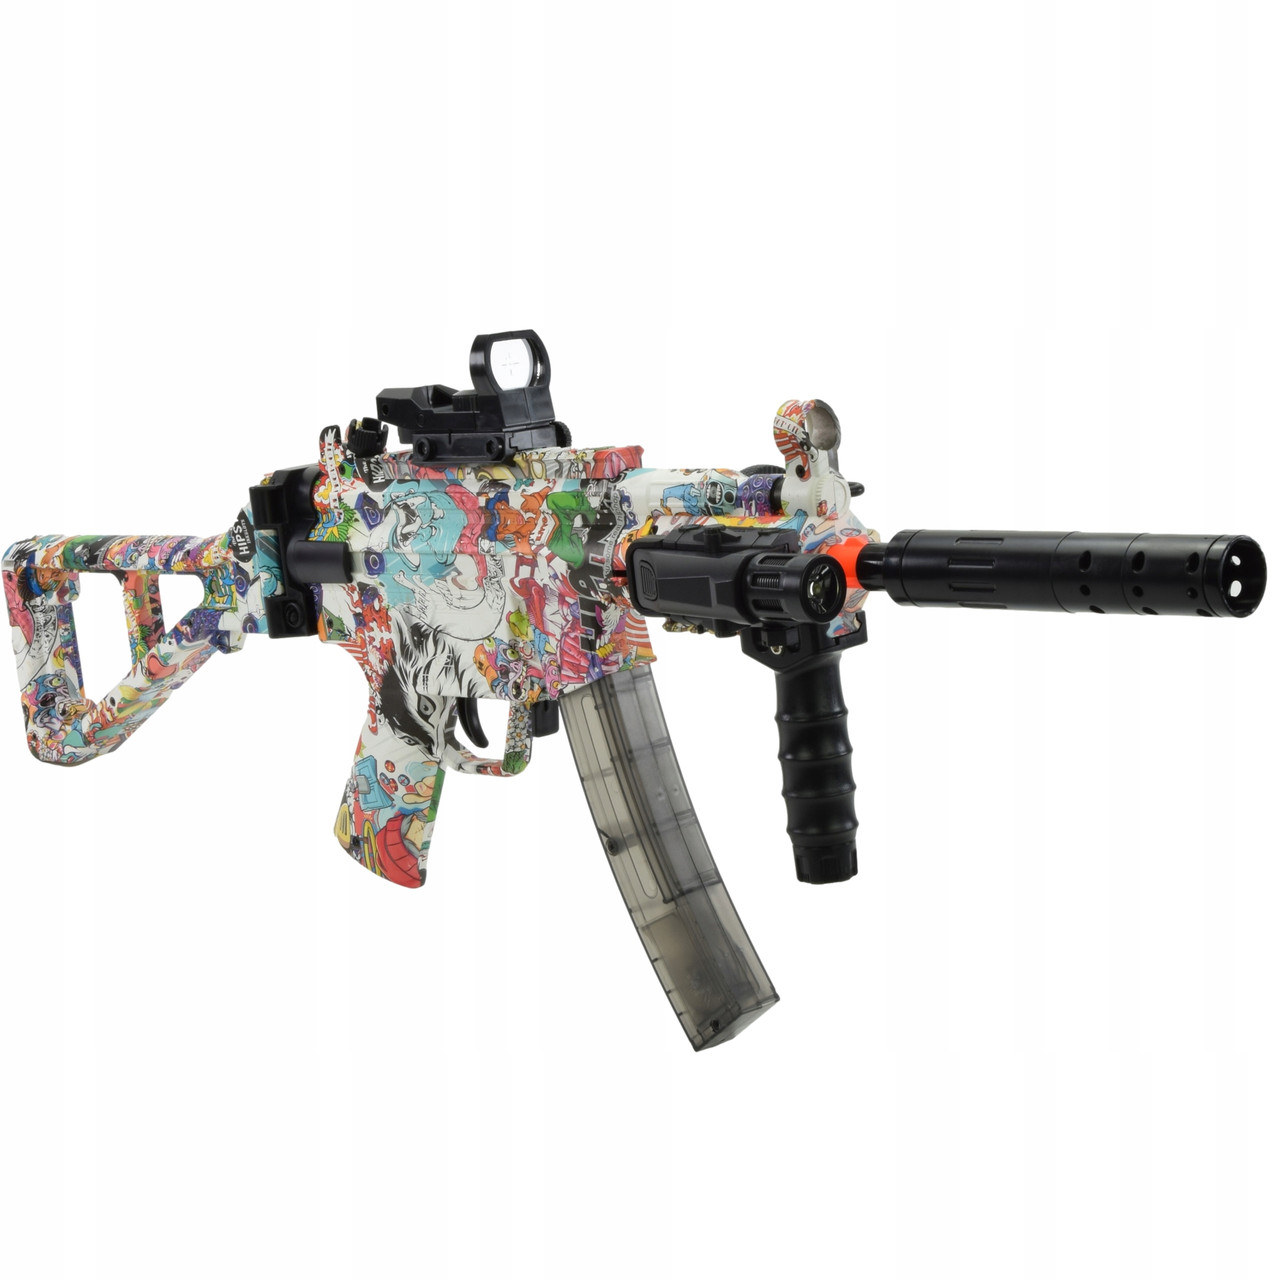 Пістолет кулемет дитячий MP5 на гелевих кульках graffiti